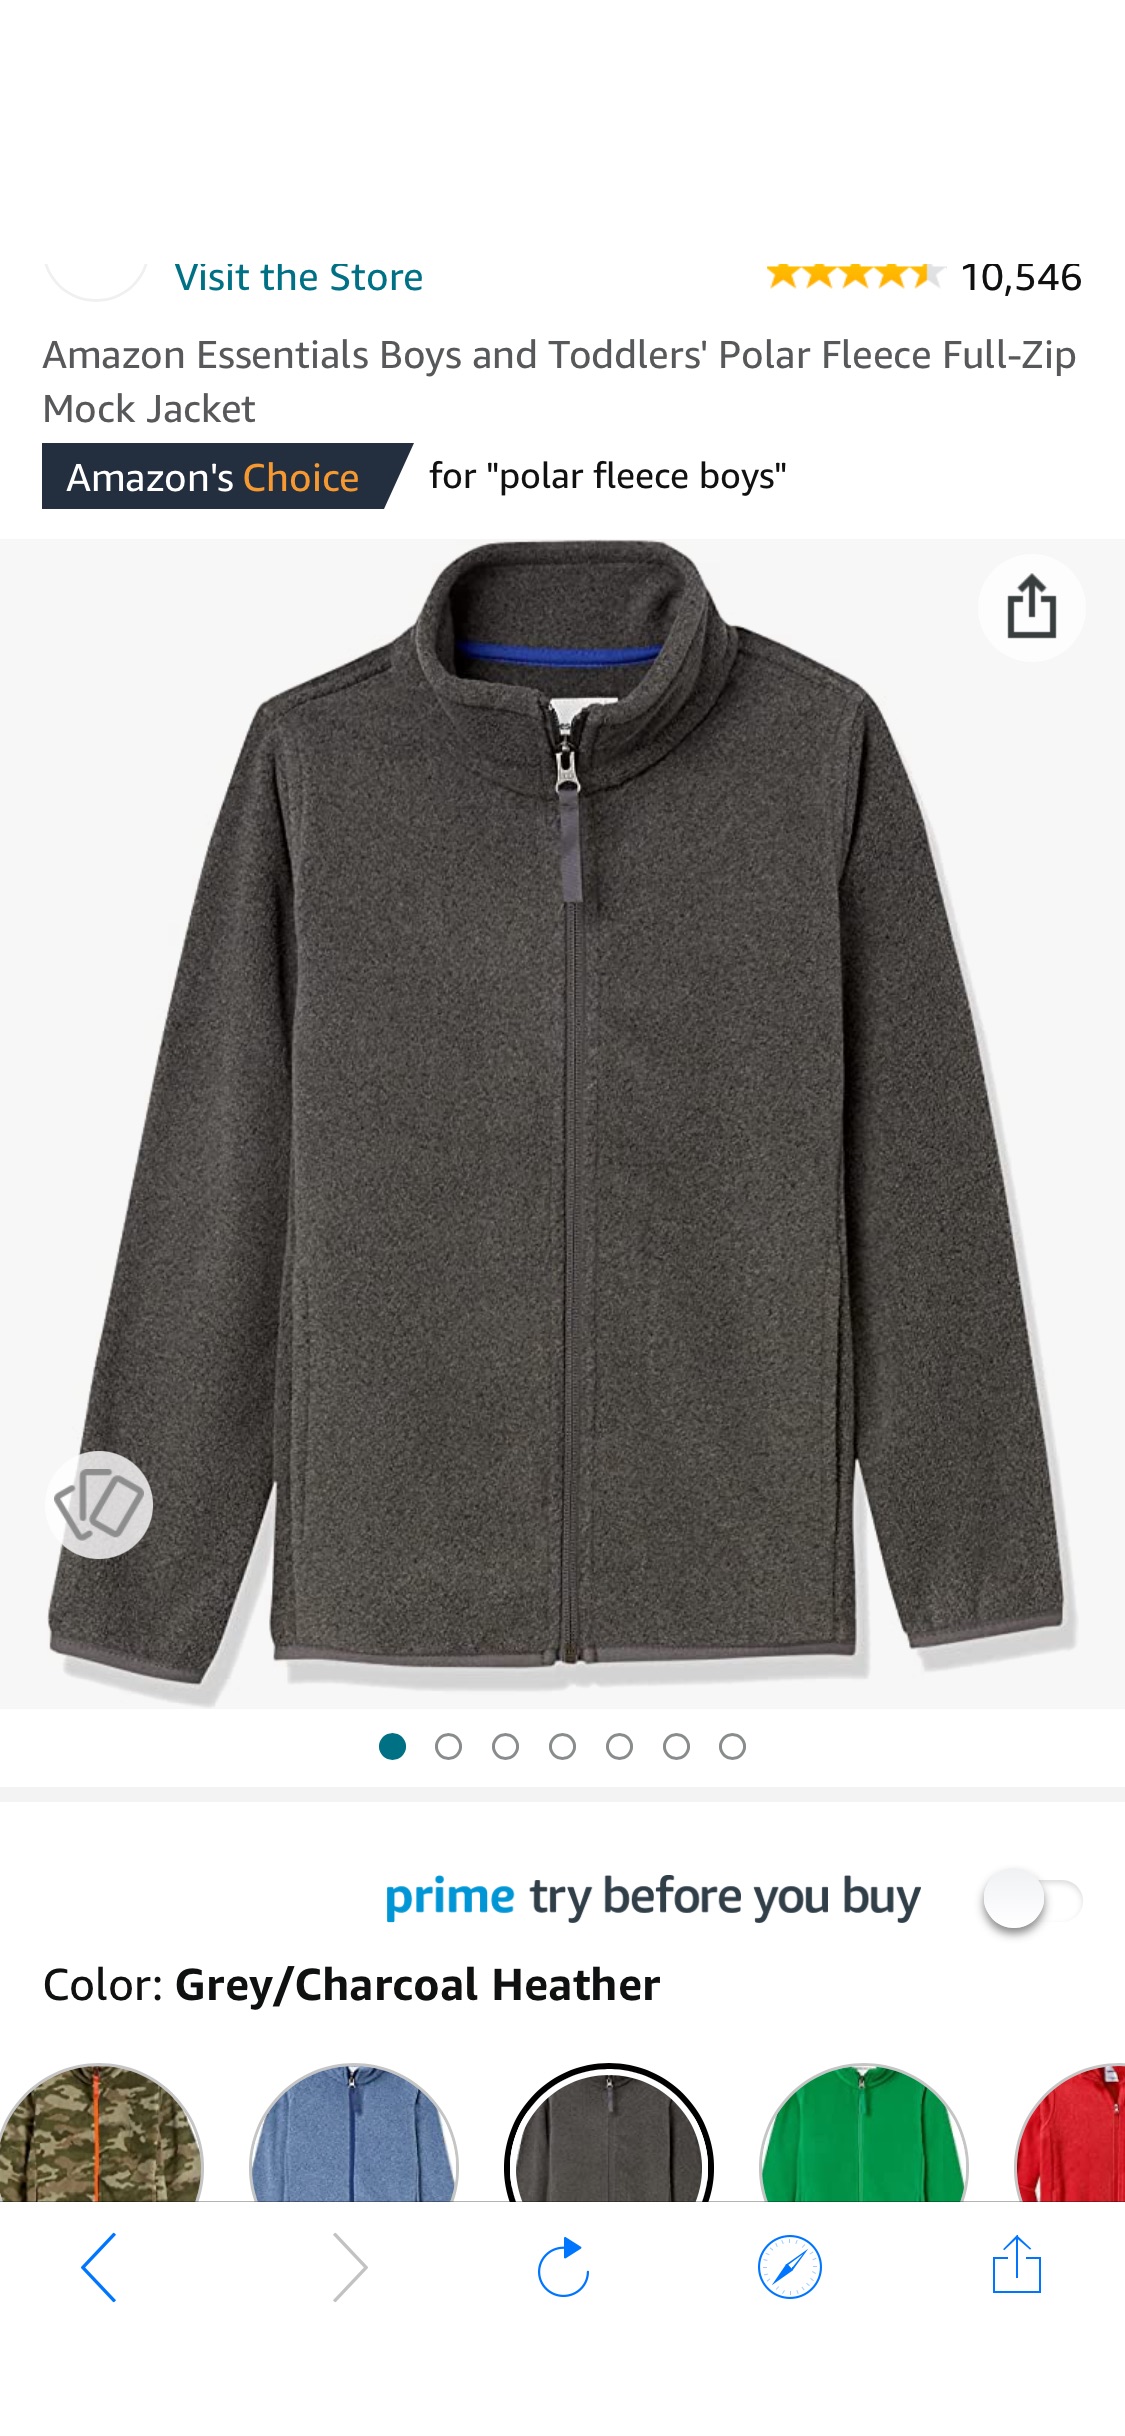 Amazon.com: Amazon Essentials Boys' Polar Fleece Full-Zip Mock Jacket男童抓绒外套